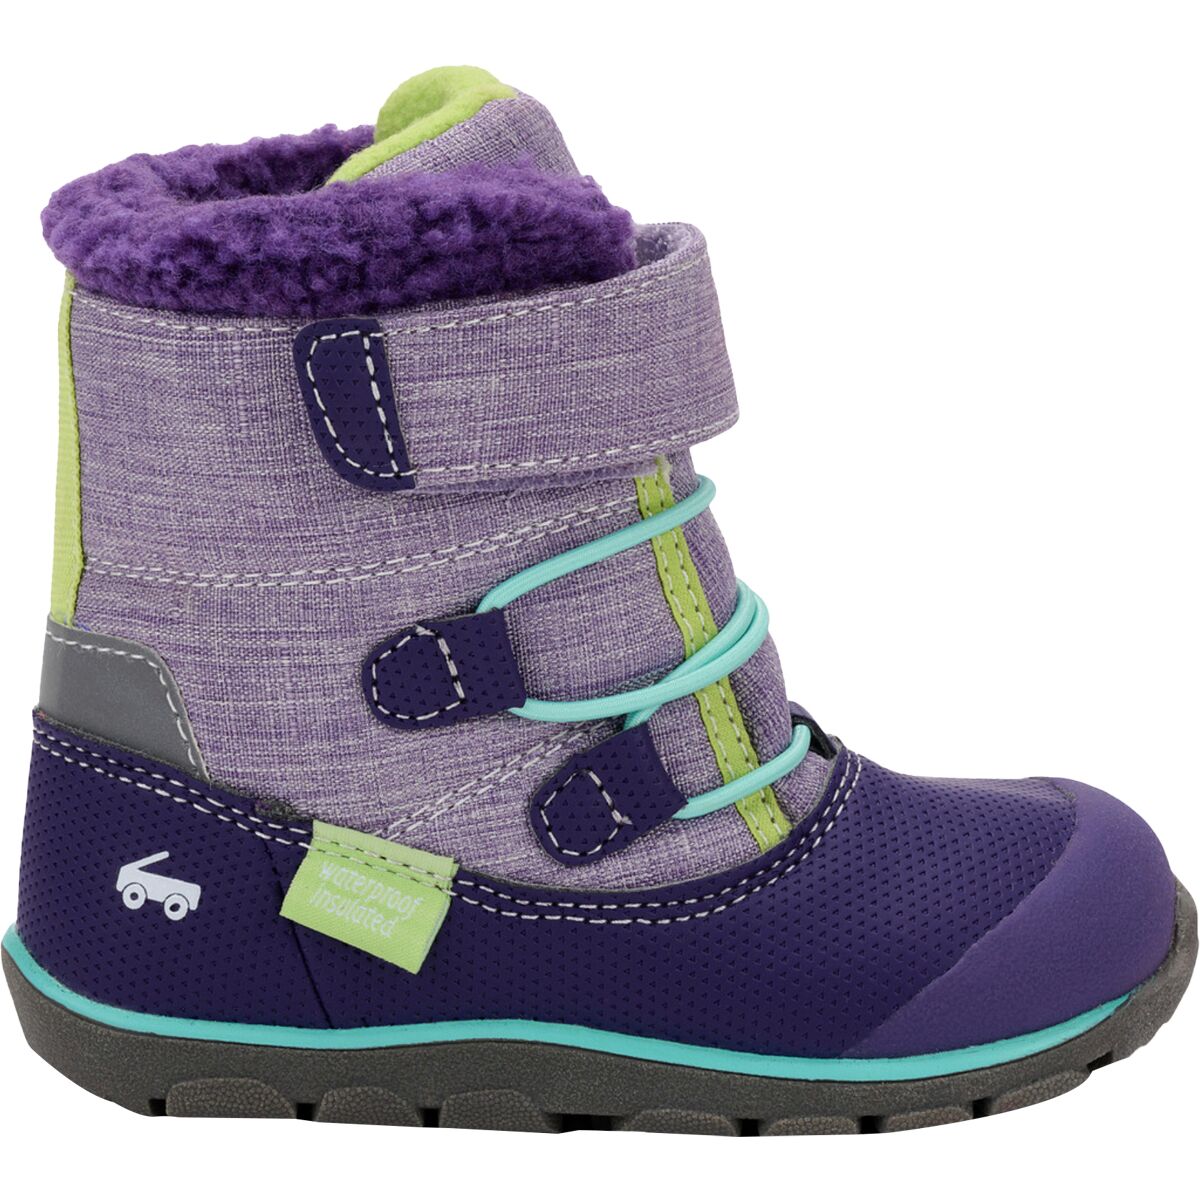 Gilman Waterproof Insulated Boot - Girls